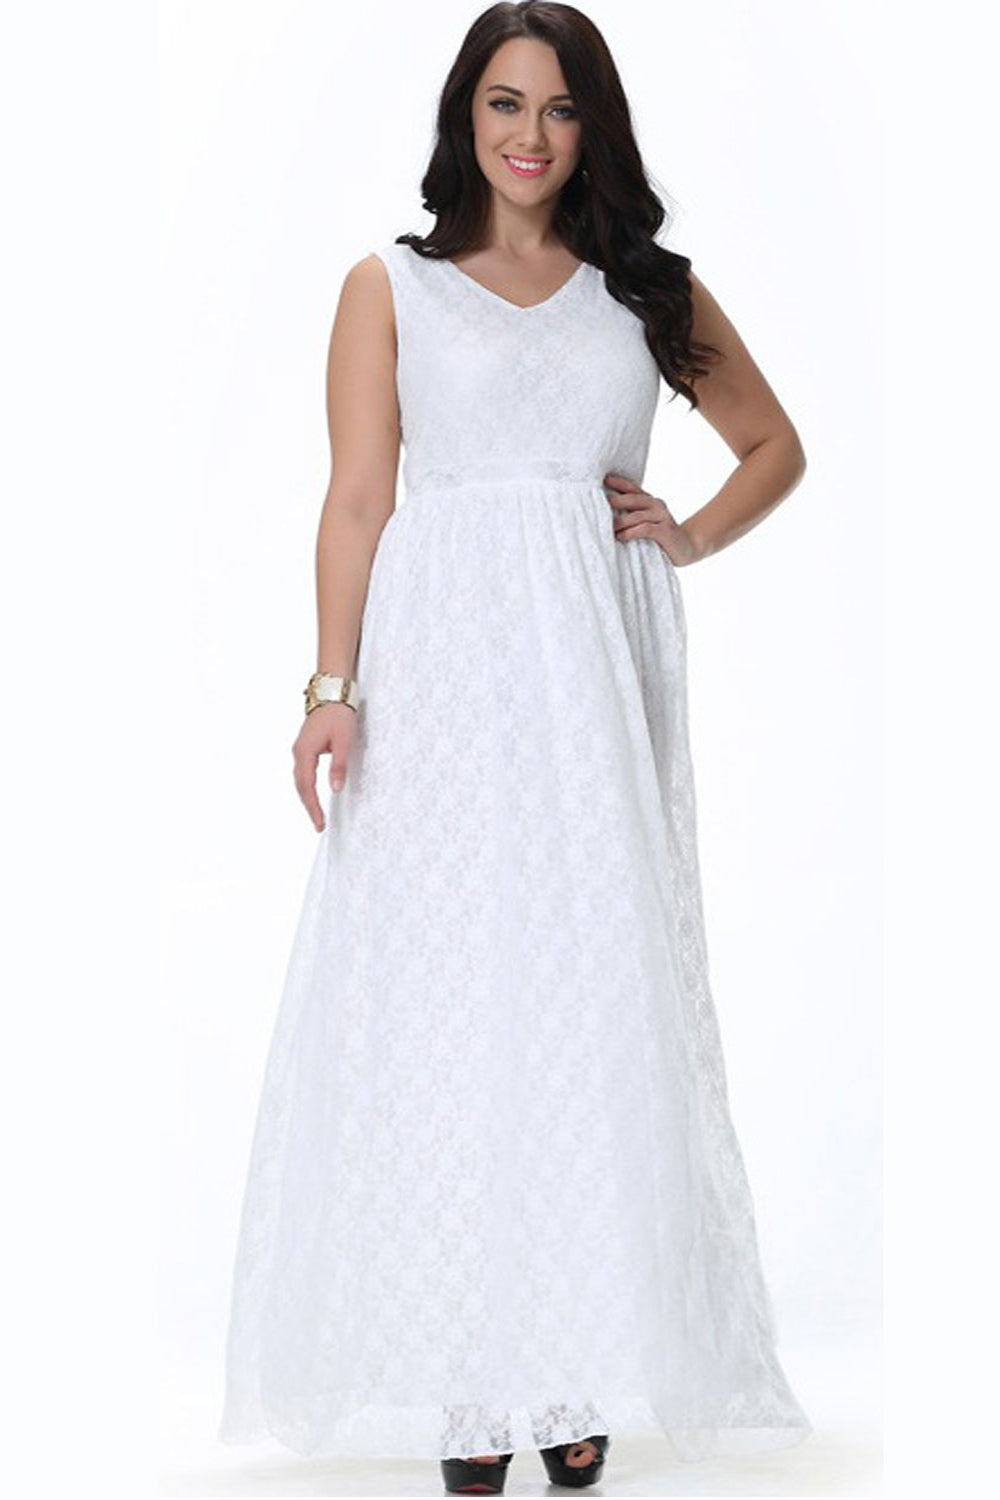 Ketty More Women Wedding Sleeveless V-Neck Plus Size Dress-KMWD290